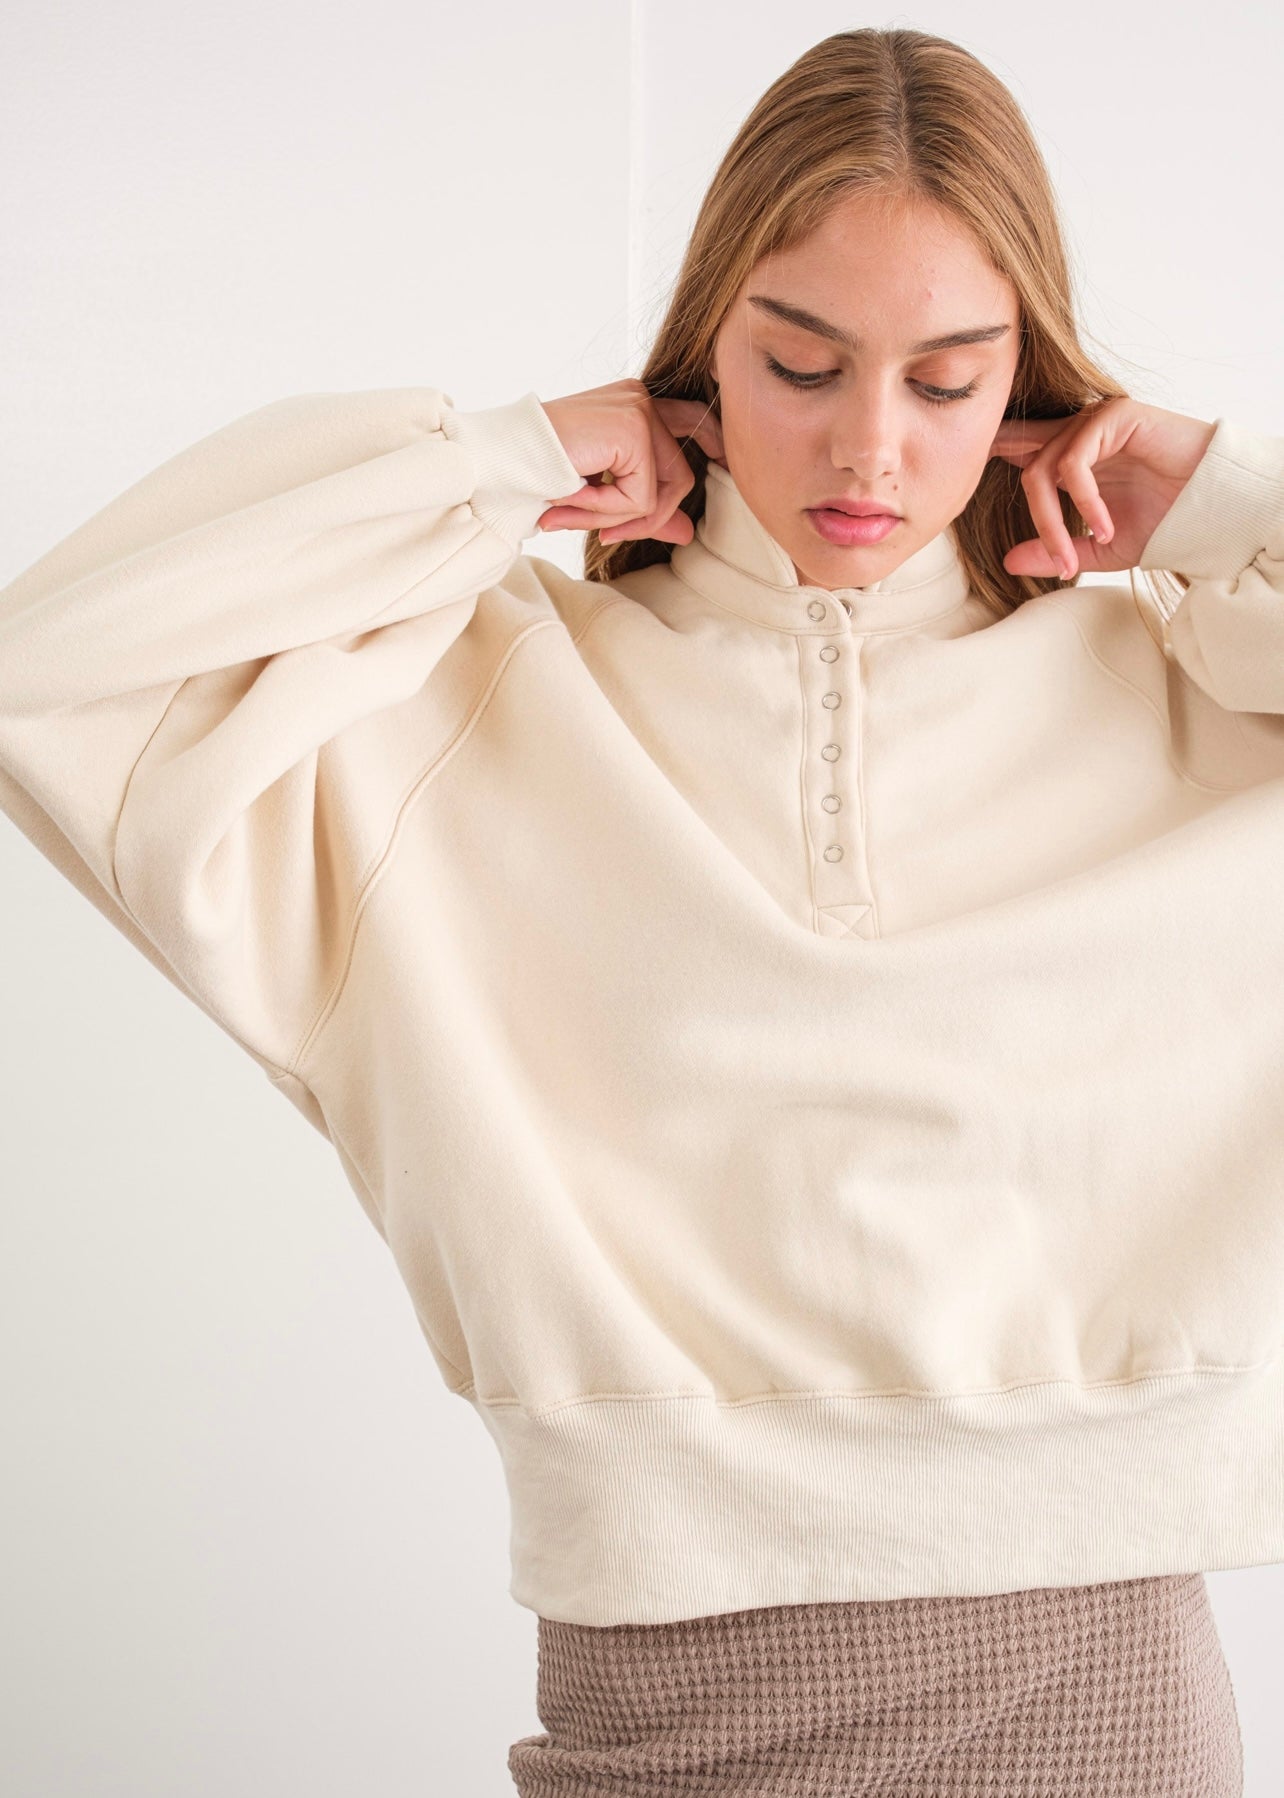 Snuggles & Cuddles Collared Cream Sweatshirt